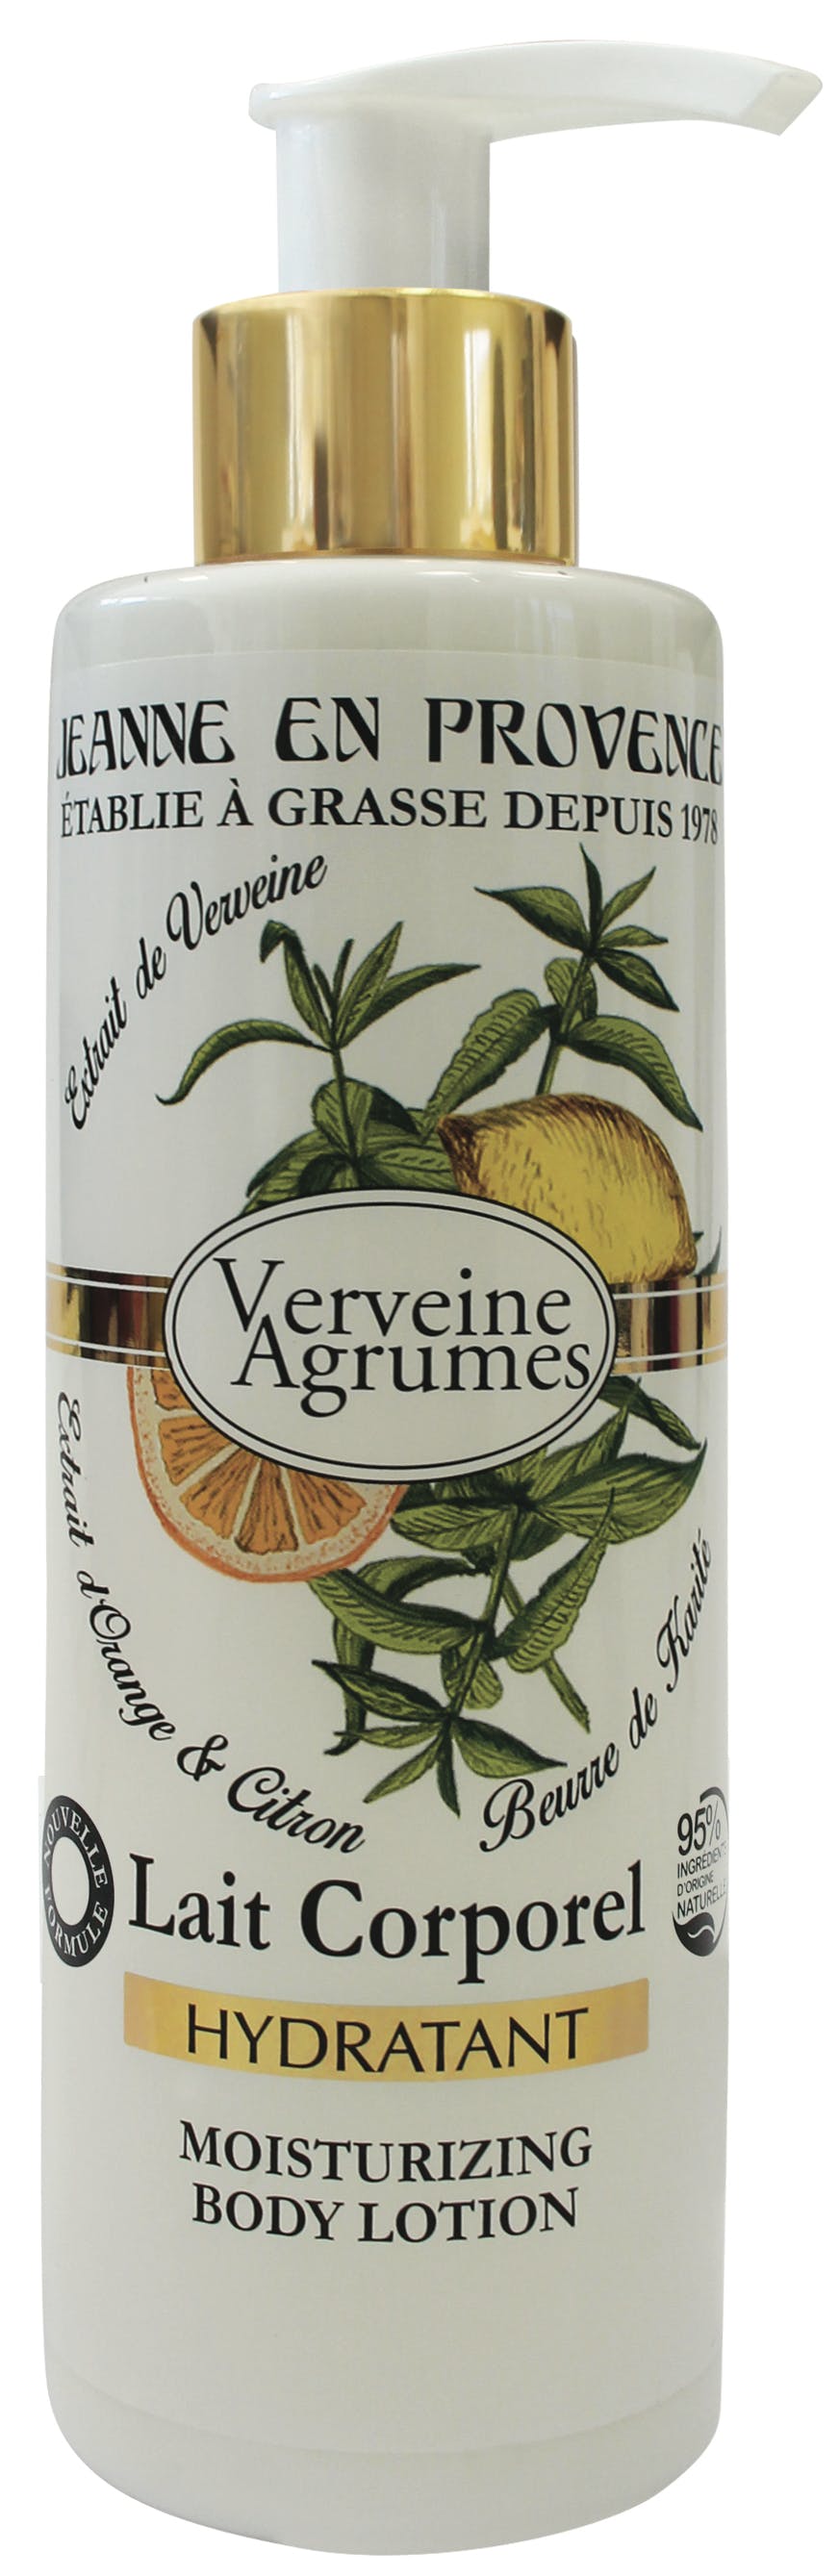 Jeanne en Provence Verveine Argmues Body Lotion 250 ml